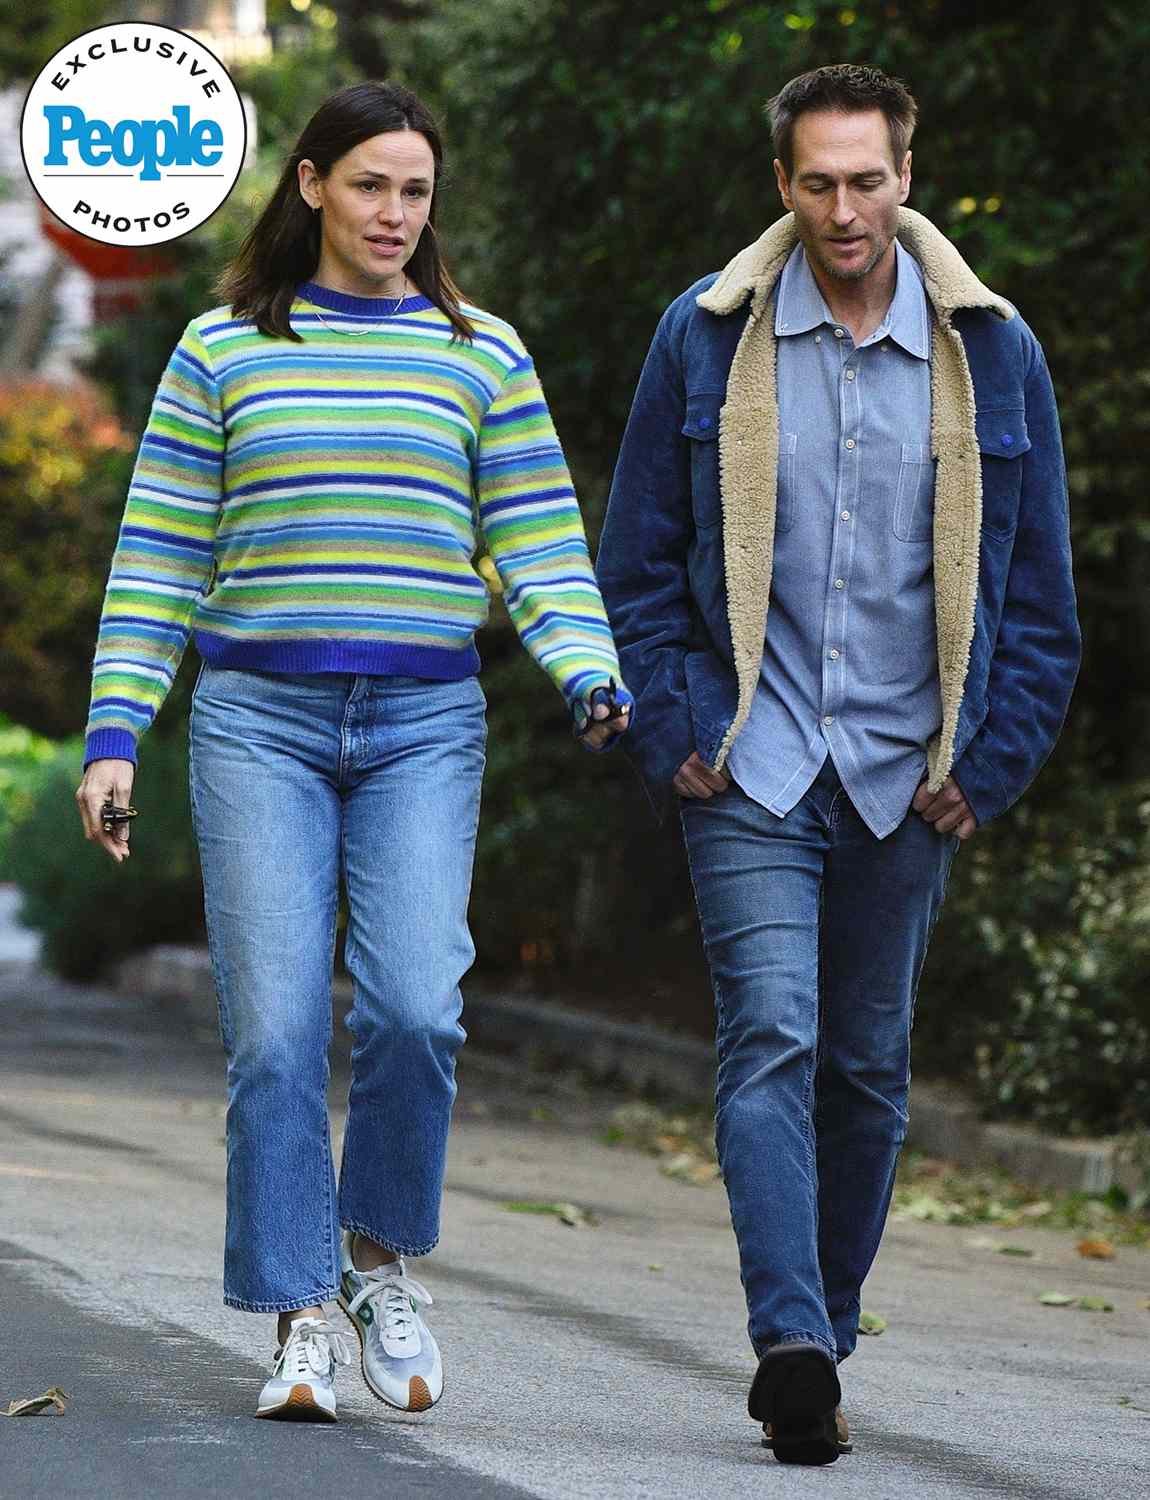 Jennifer Garner enjoys a leisurely evening stroll, engaging in a deep conversation with her boyfriend, John Miller, as they walk side by side through her neighborhood.